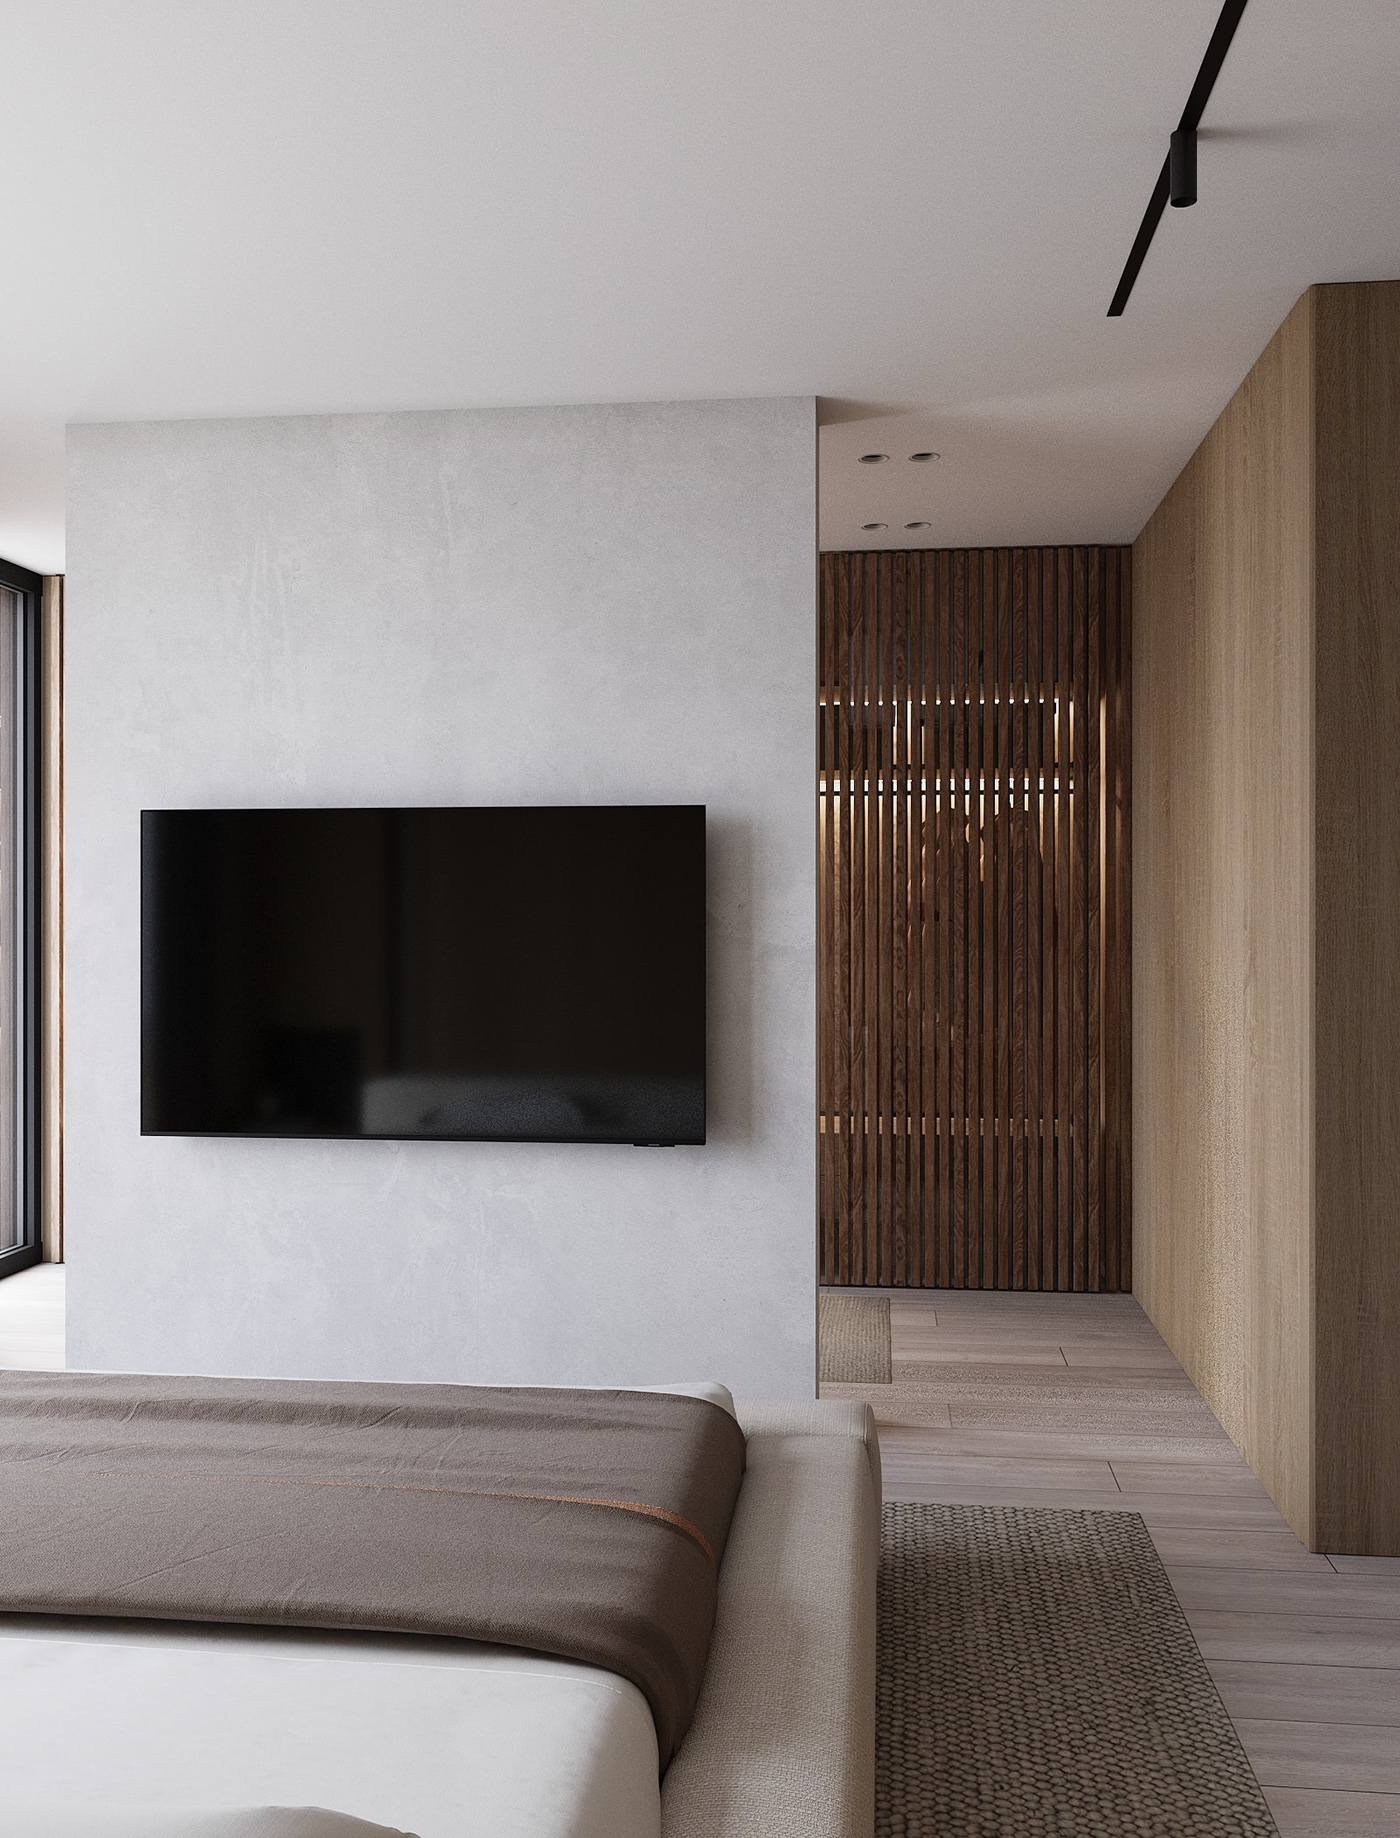 3ds max bedroom bedroom design Bedroom interior CGI corona interior design  Japandi Render visualization